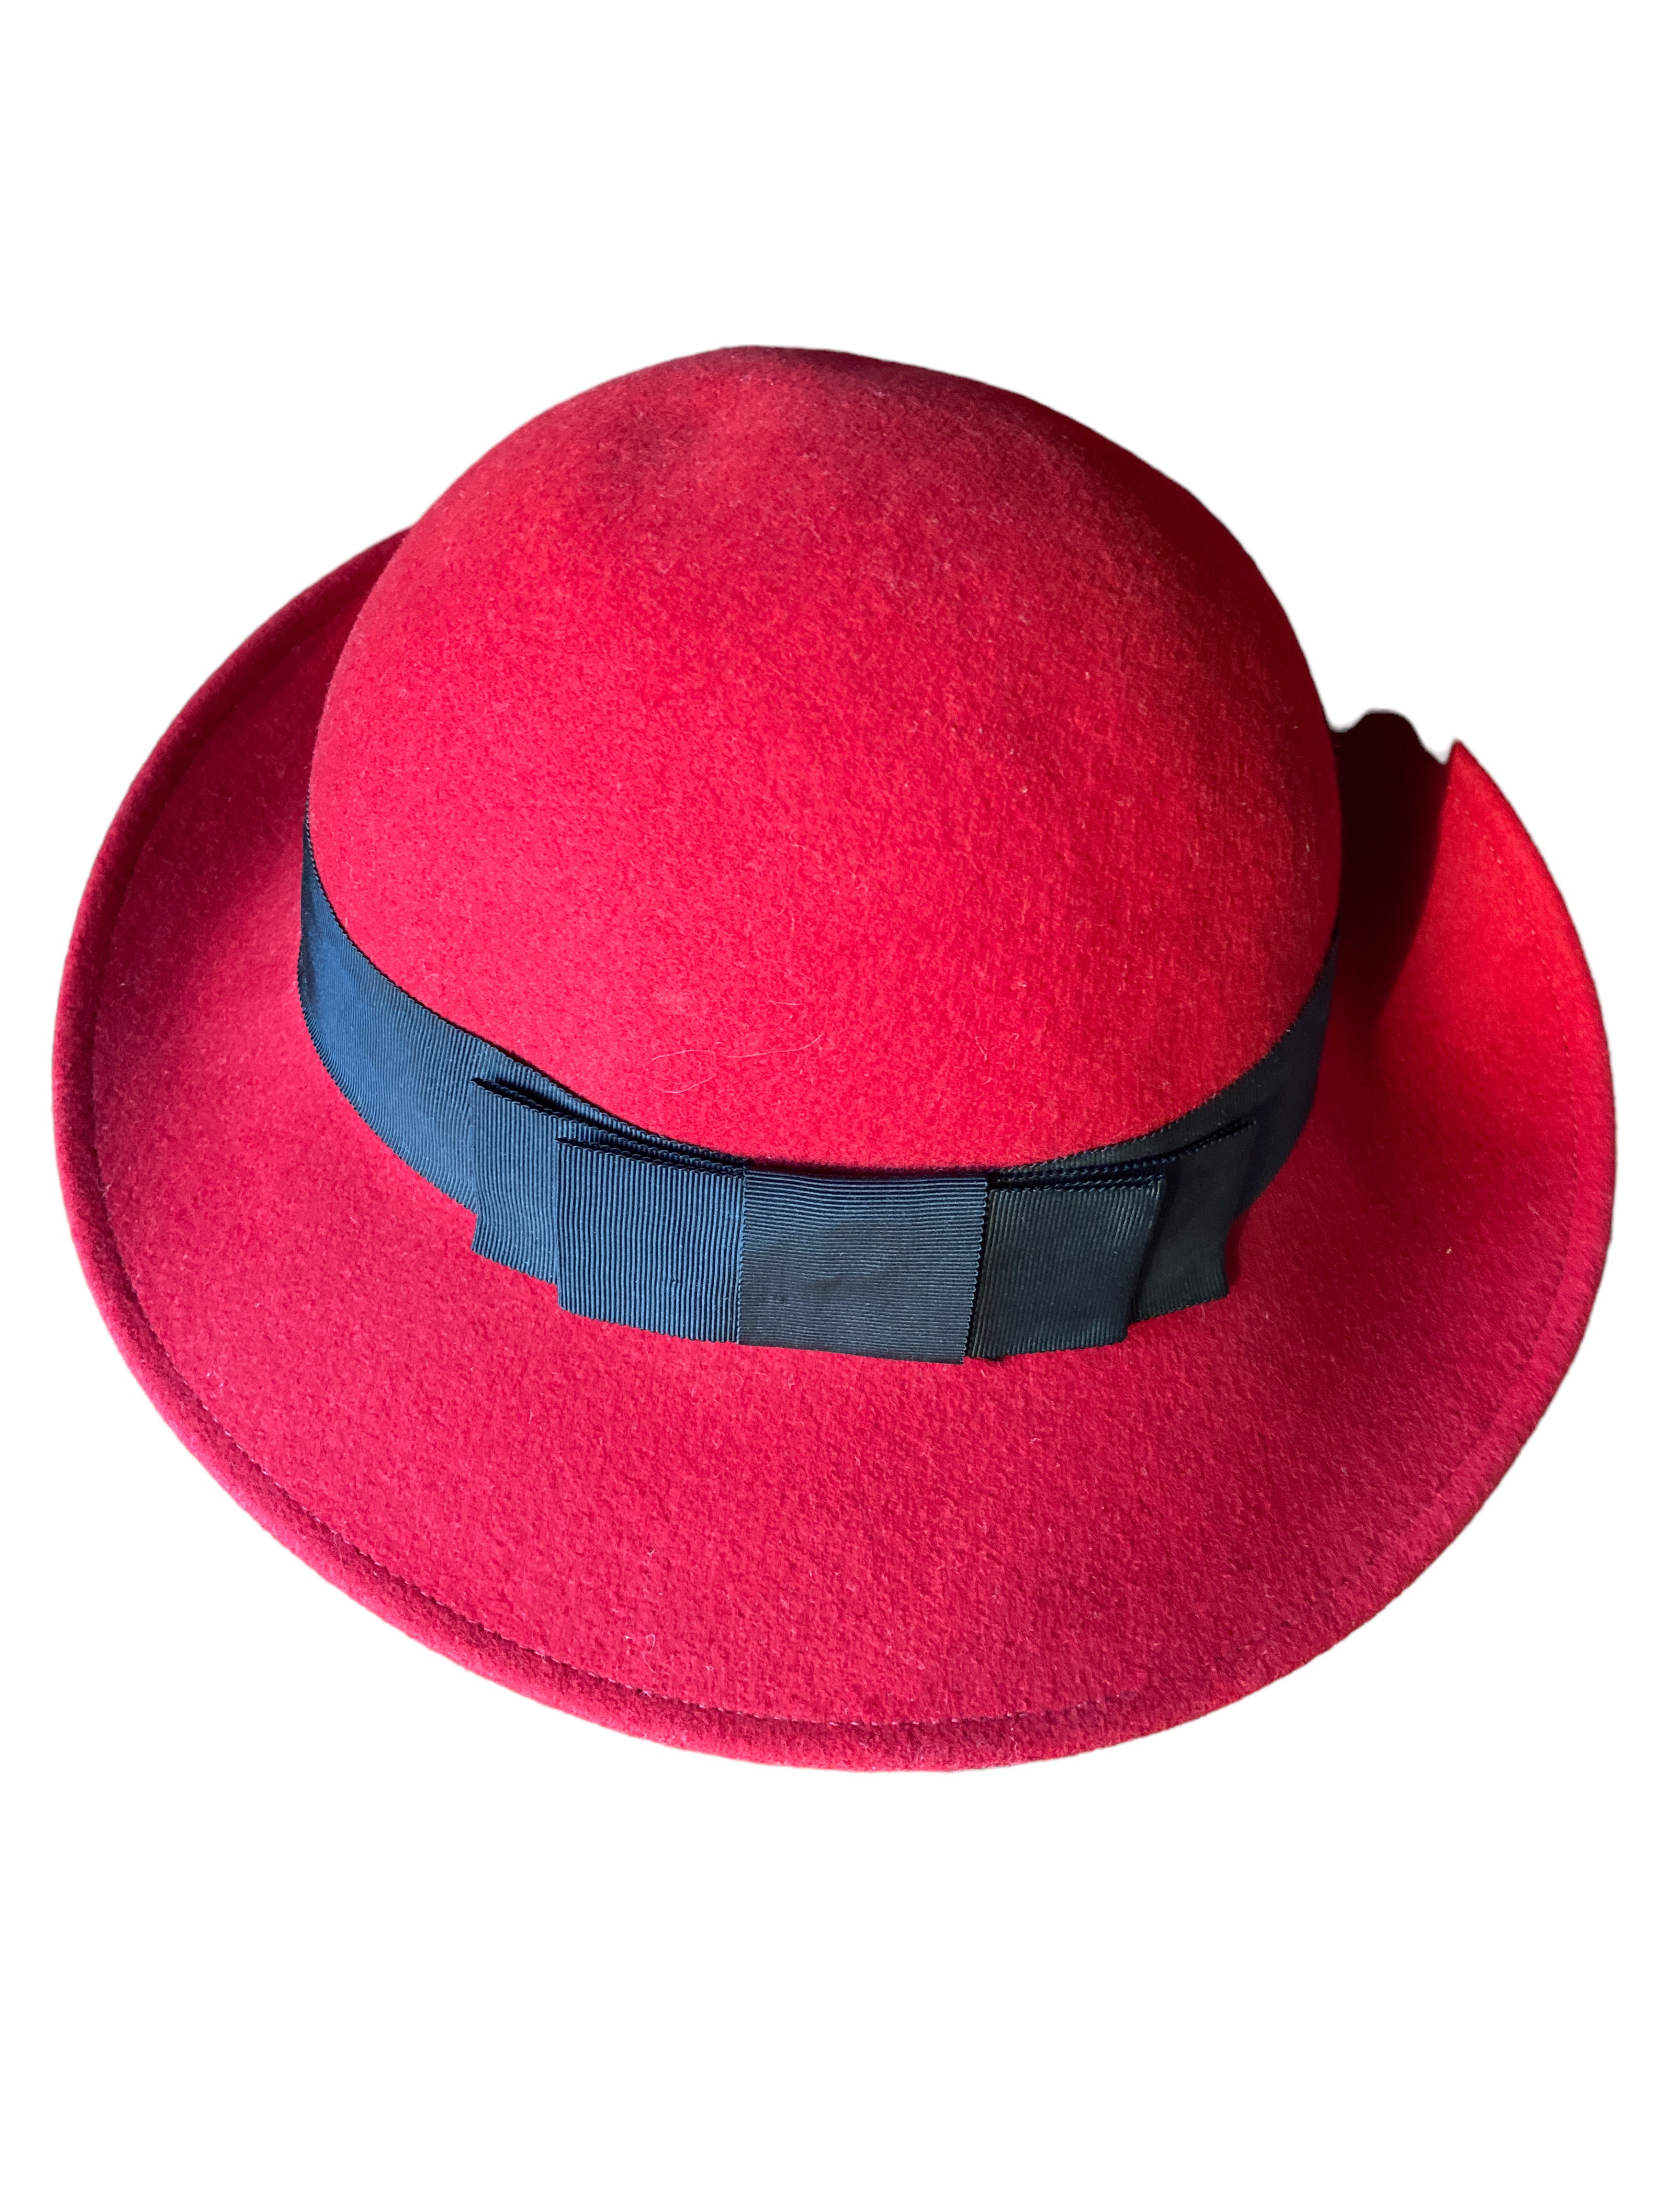 Vintage Red Wool Felt Hat with Black Grosgrain Ribbon, S